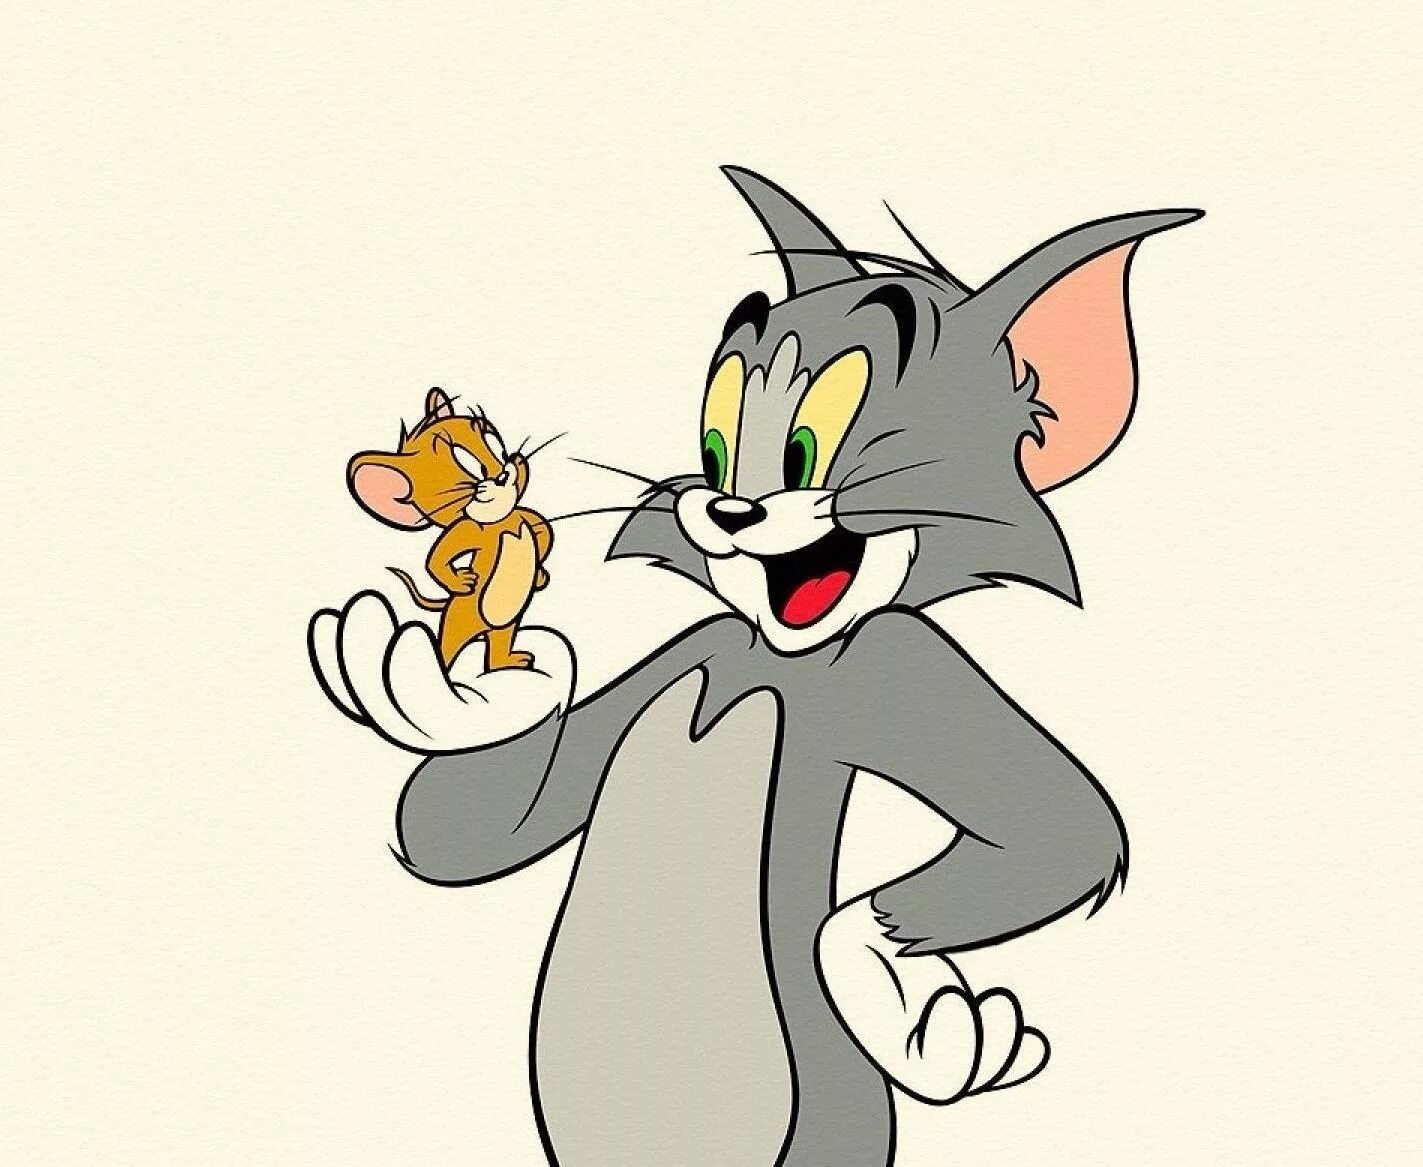 Том из тома и джерри. Tom and Jerry. Tom из том и Джерри. Том и Джерри 1963. Джерри из том и Джерри.